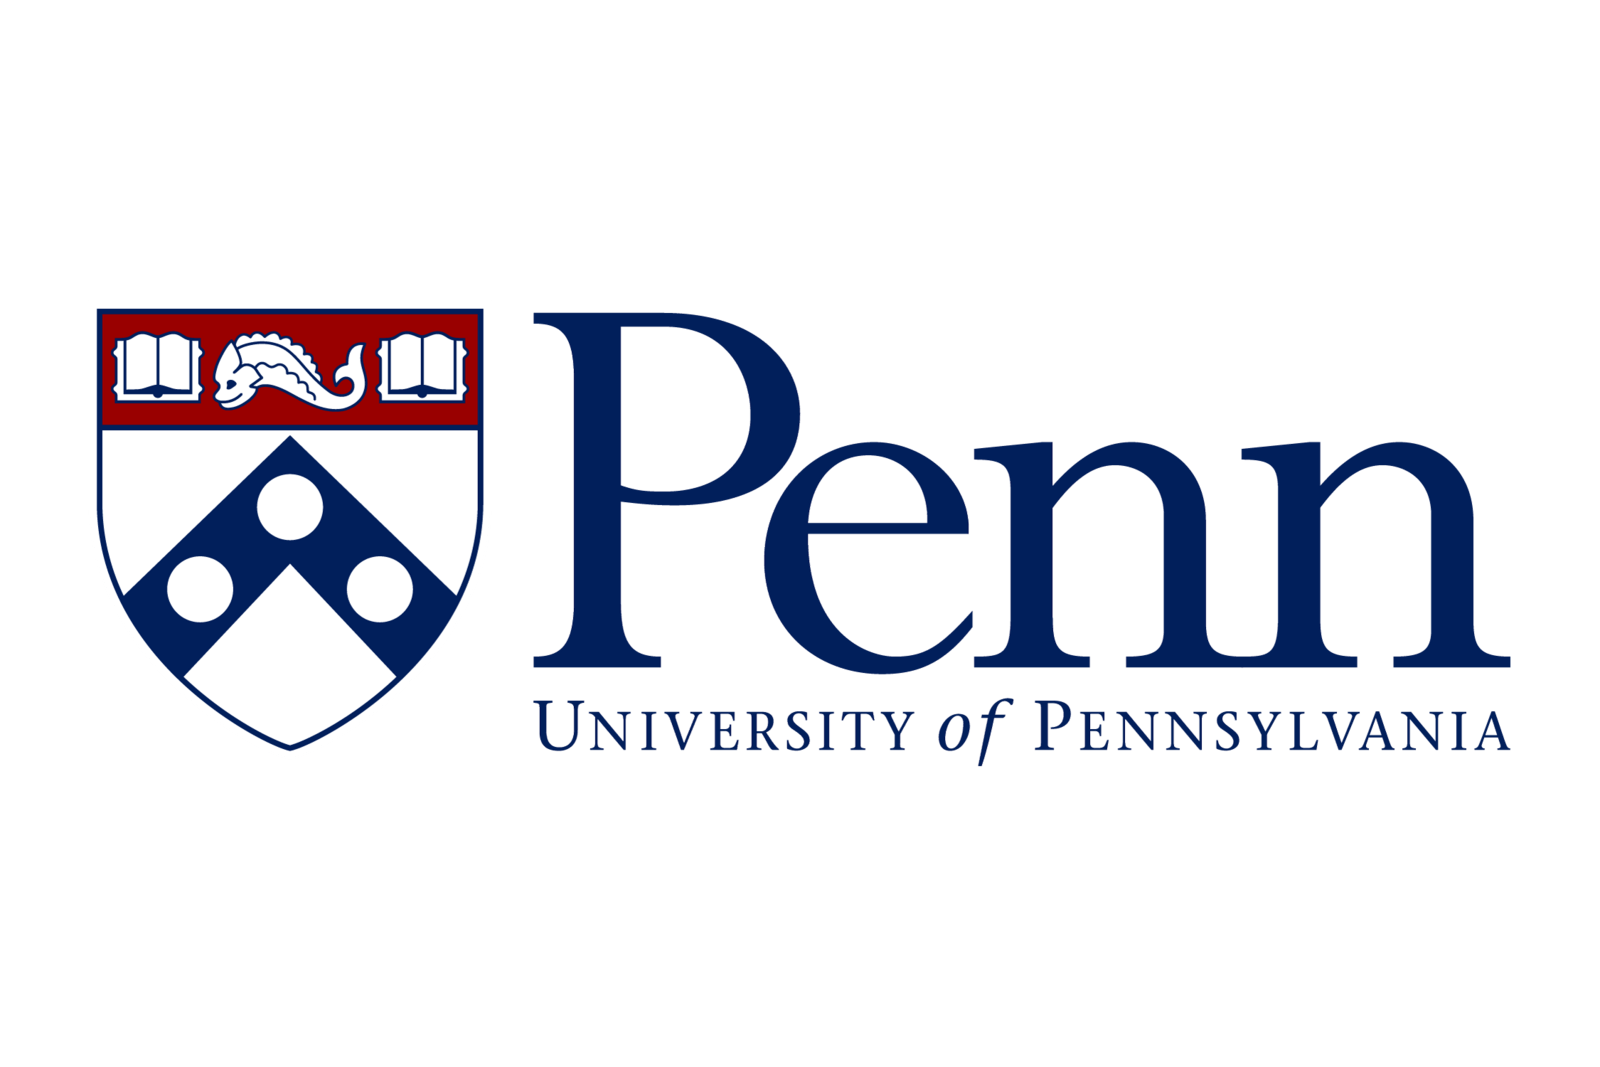 University of Pennsylvania logo